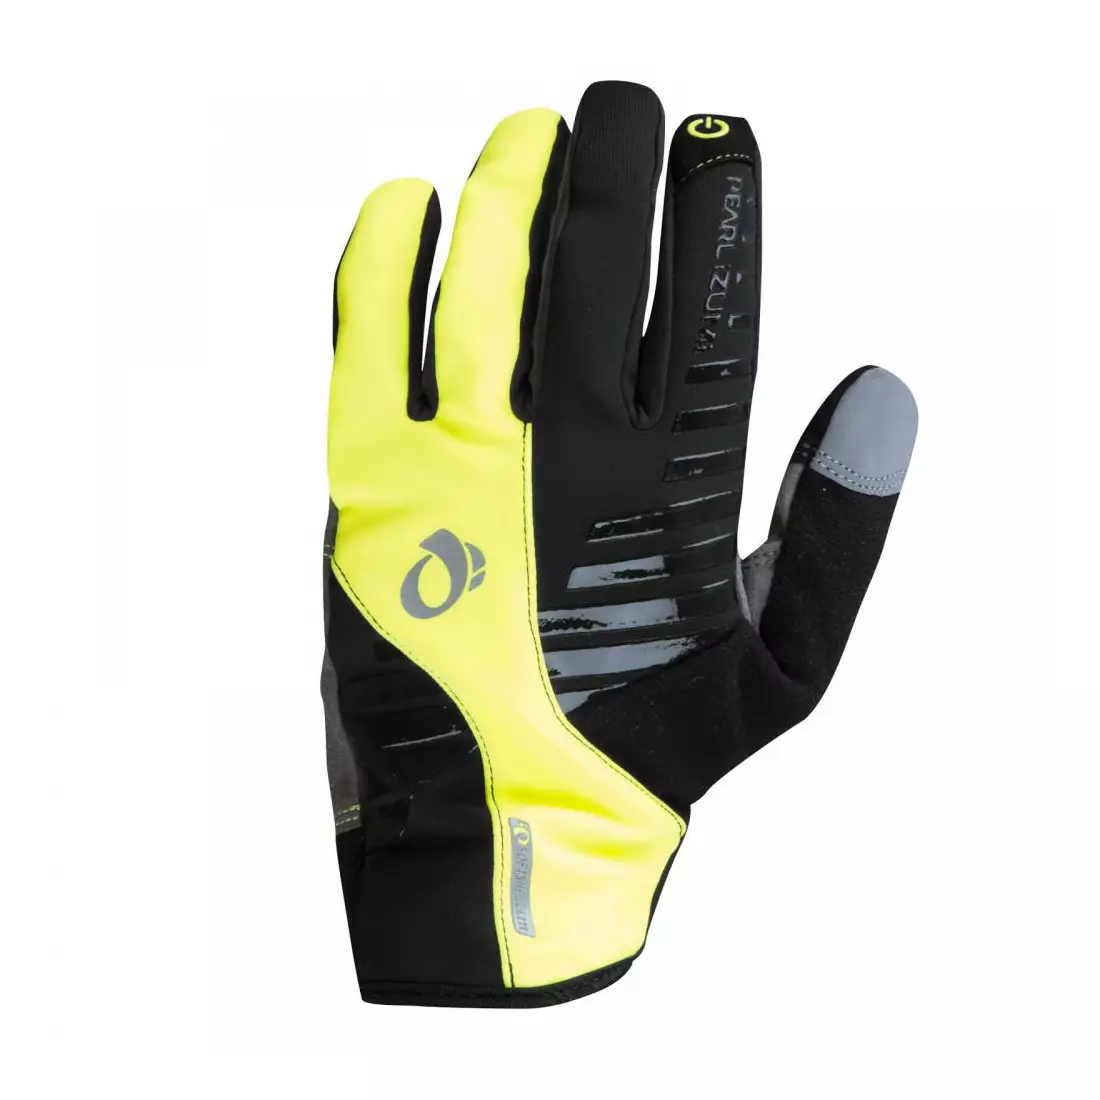 PEARL IZUMI ELITE Cyclone Gel Glove 14141407-428 - men's cycling gloves